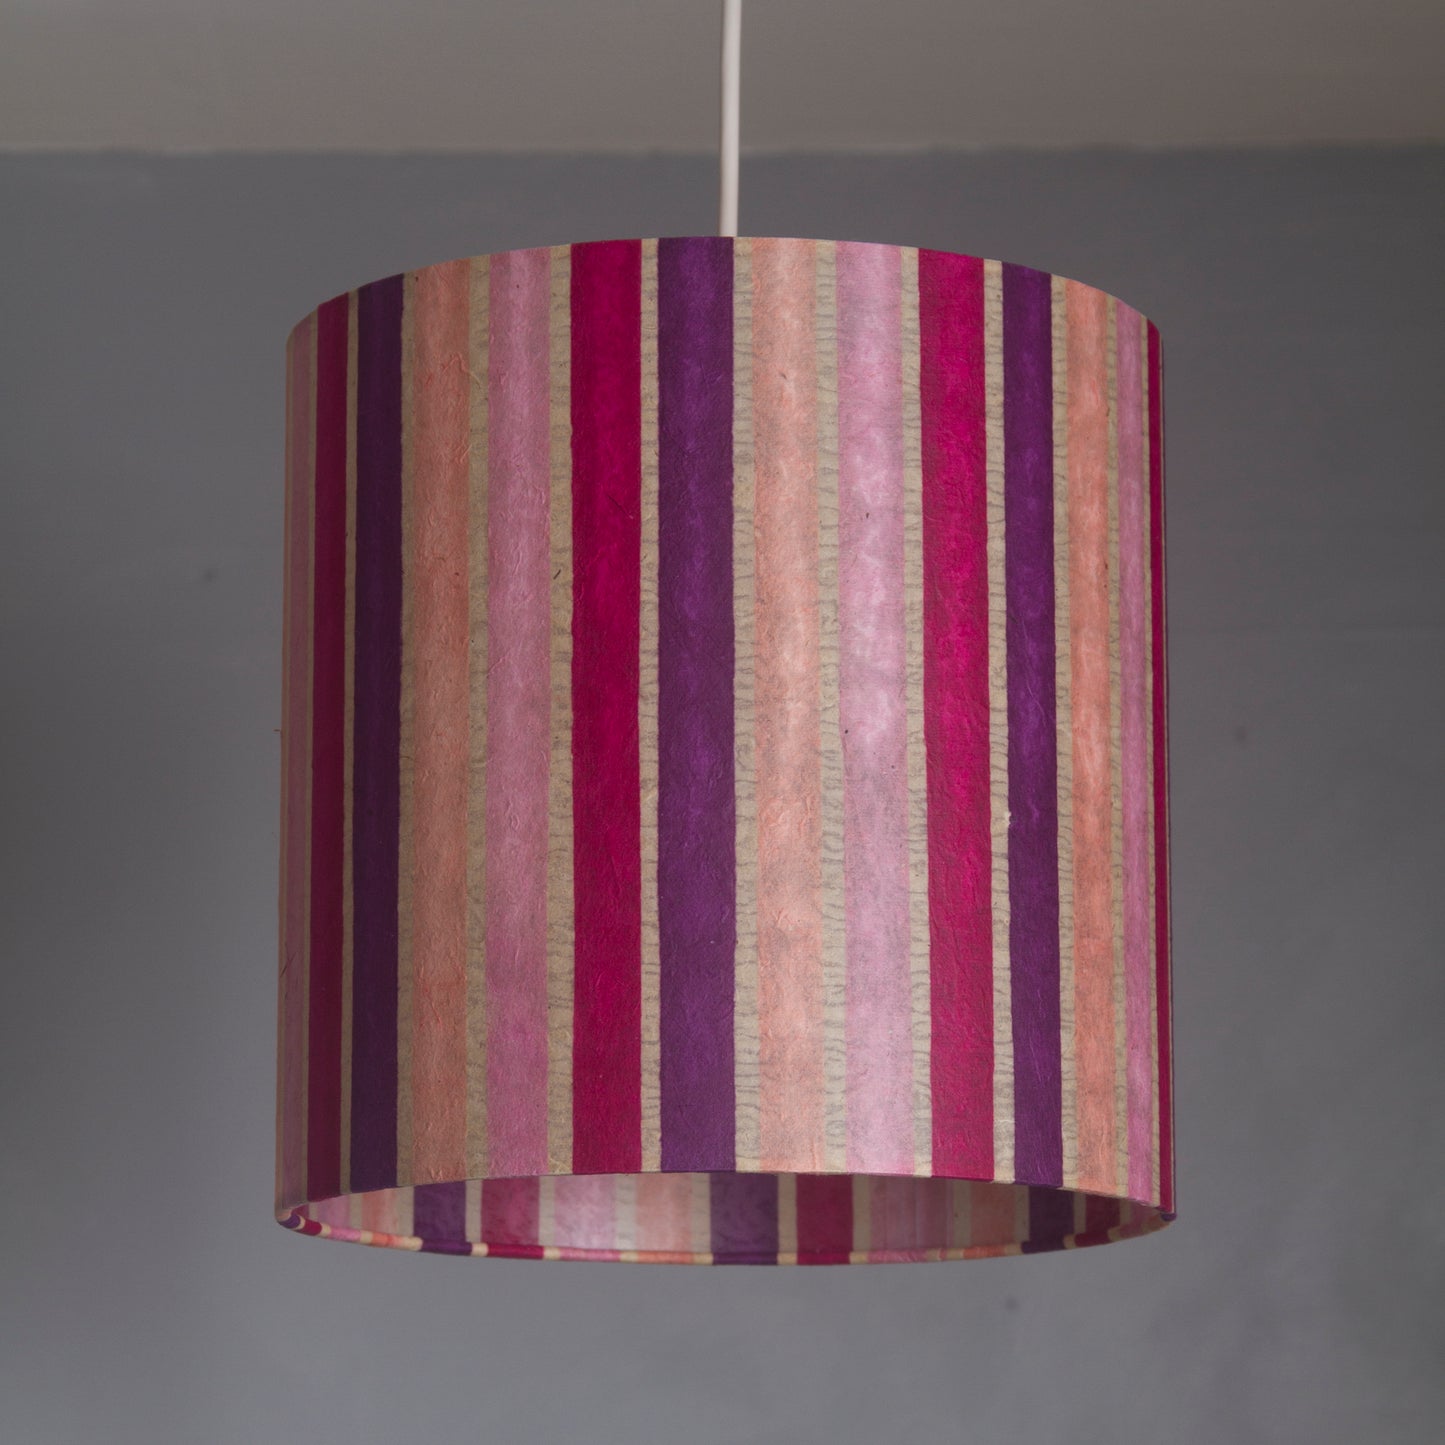 Oval Lamp Shade - P04 - Batik Stripes Pink, 40cm(w) x 30cm(h) x 30cm(d)